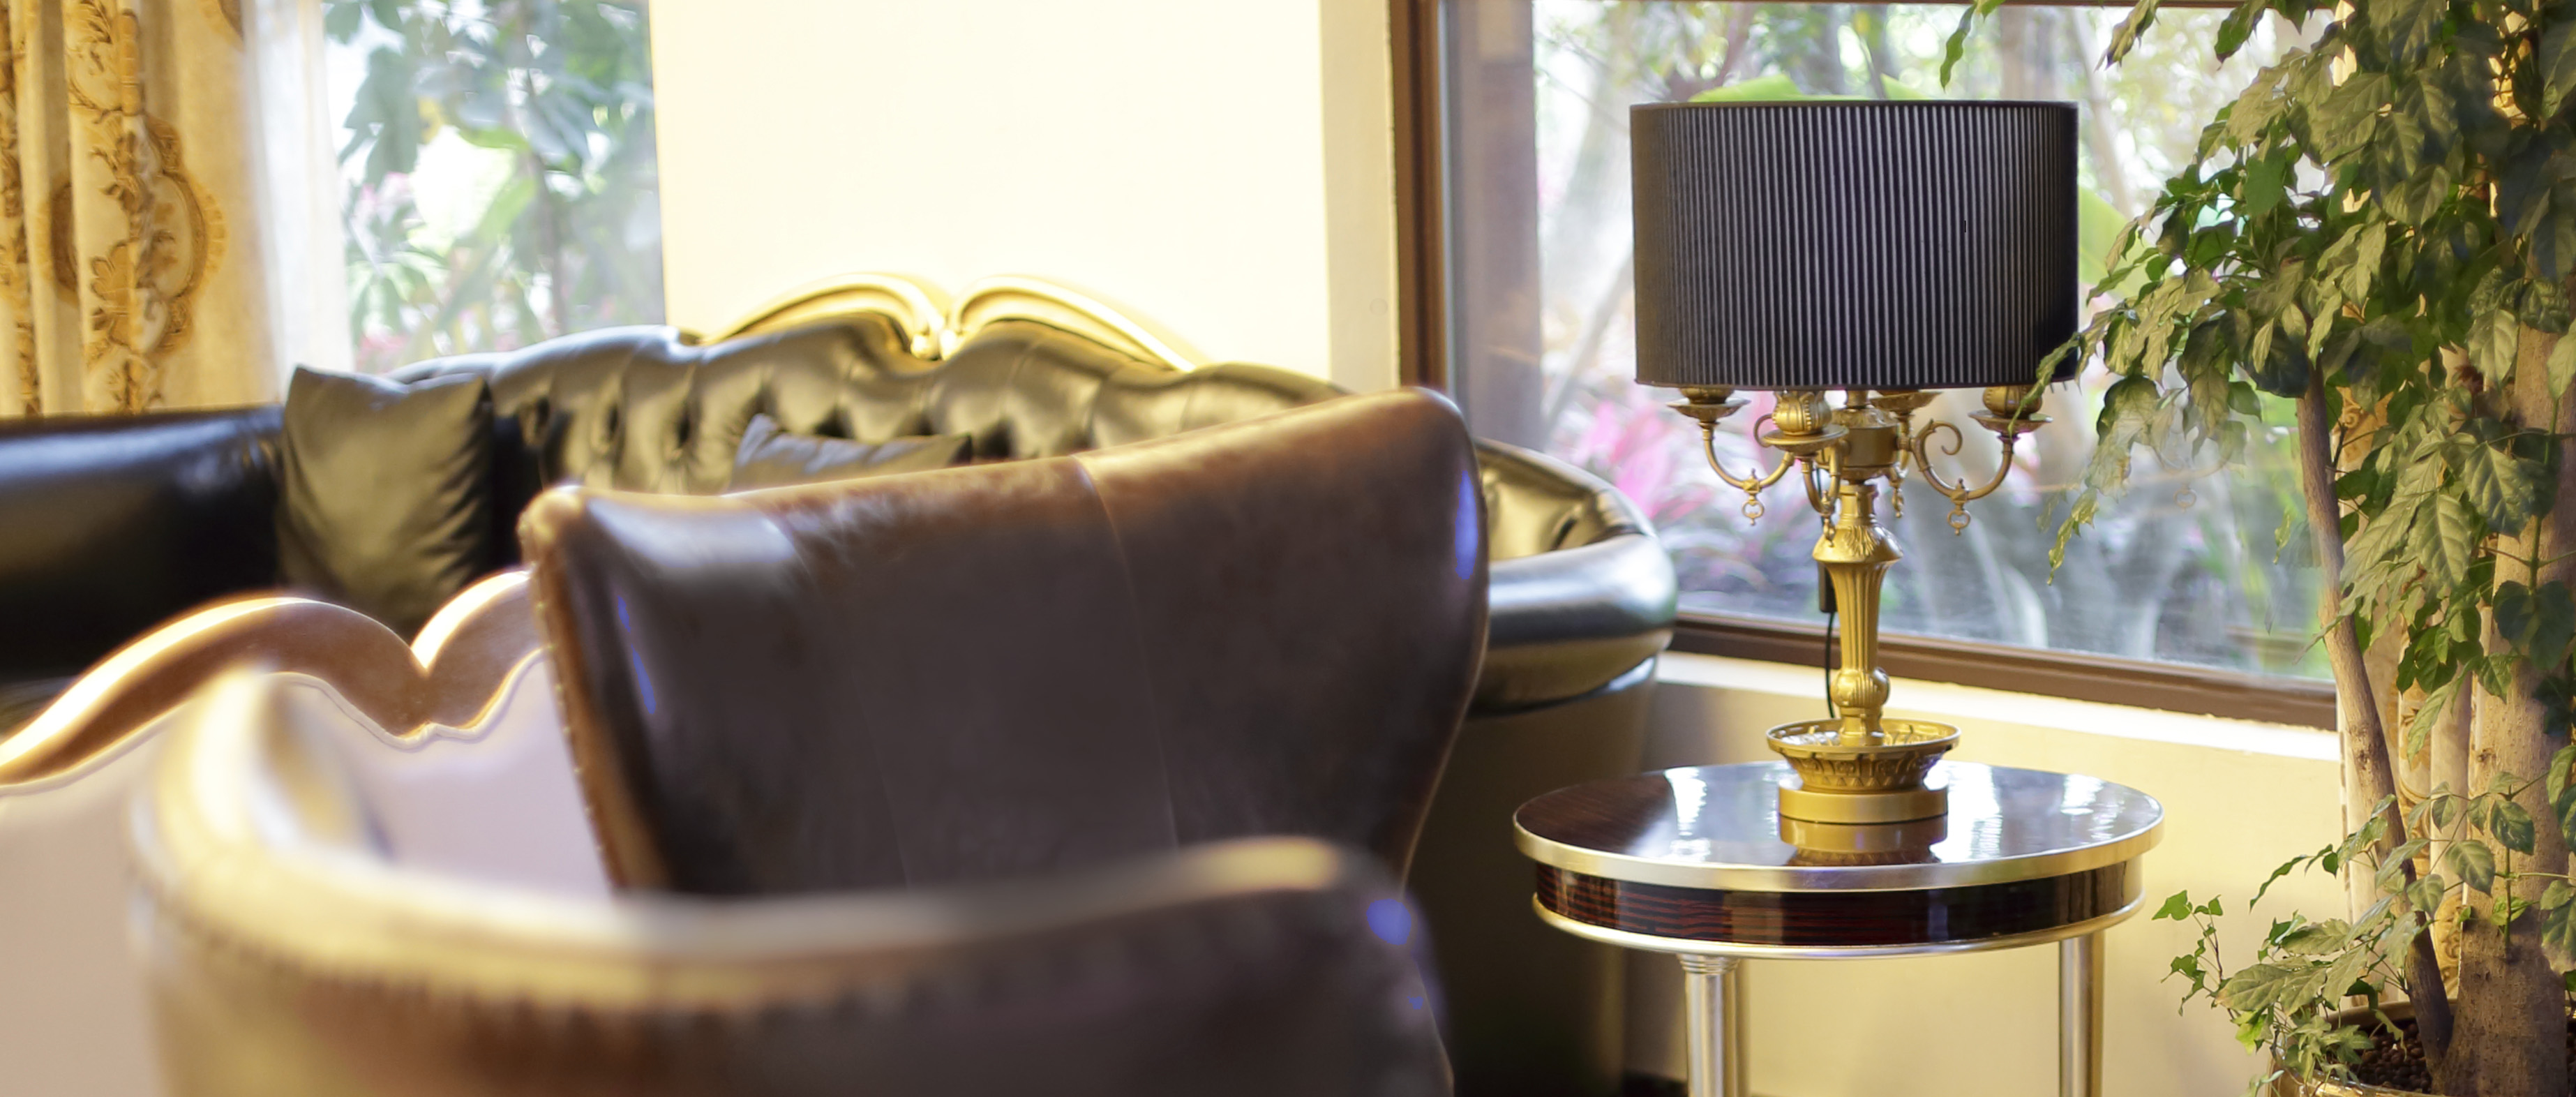 Beverly Hills Living Room beyond Five Star Hotel Standards